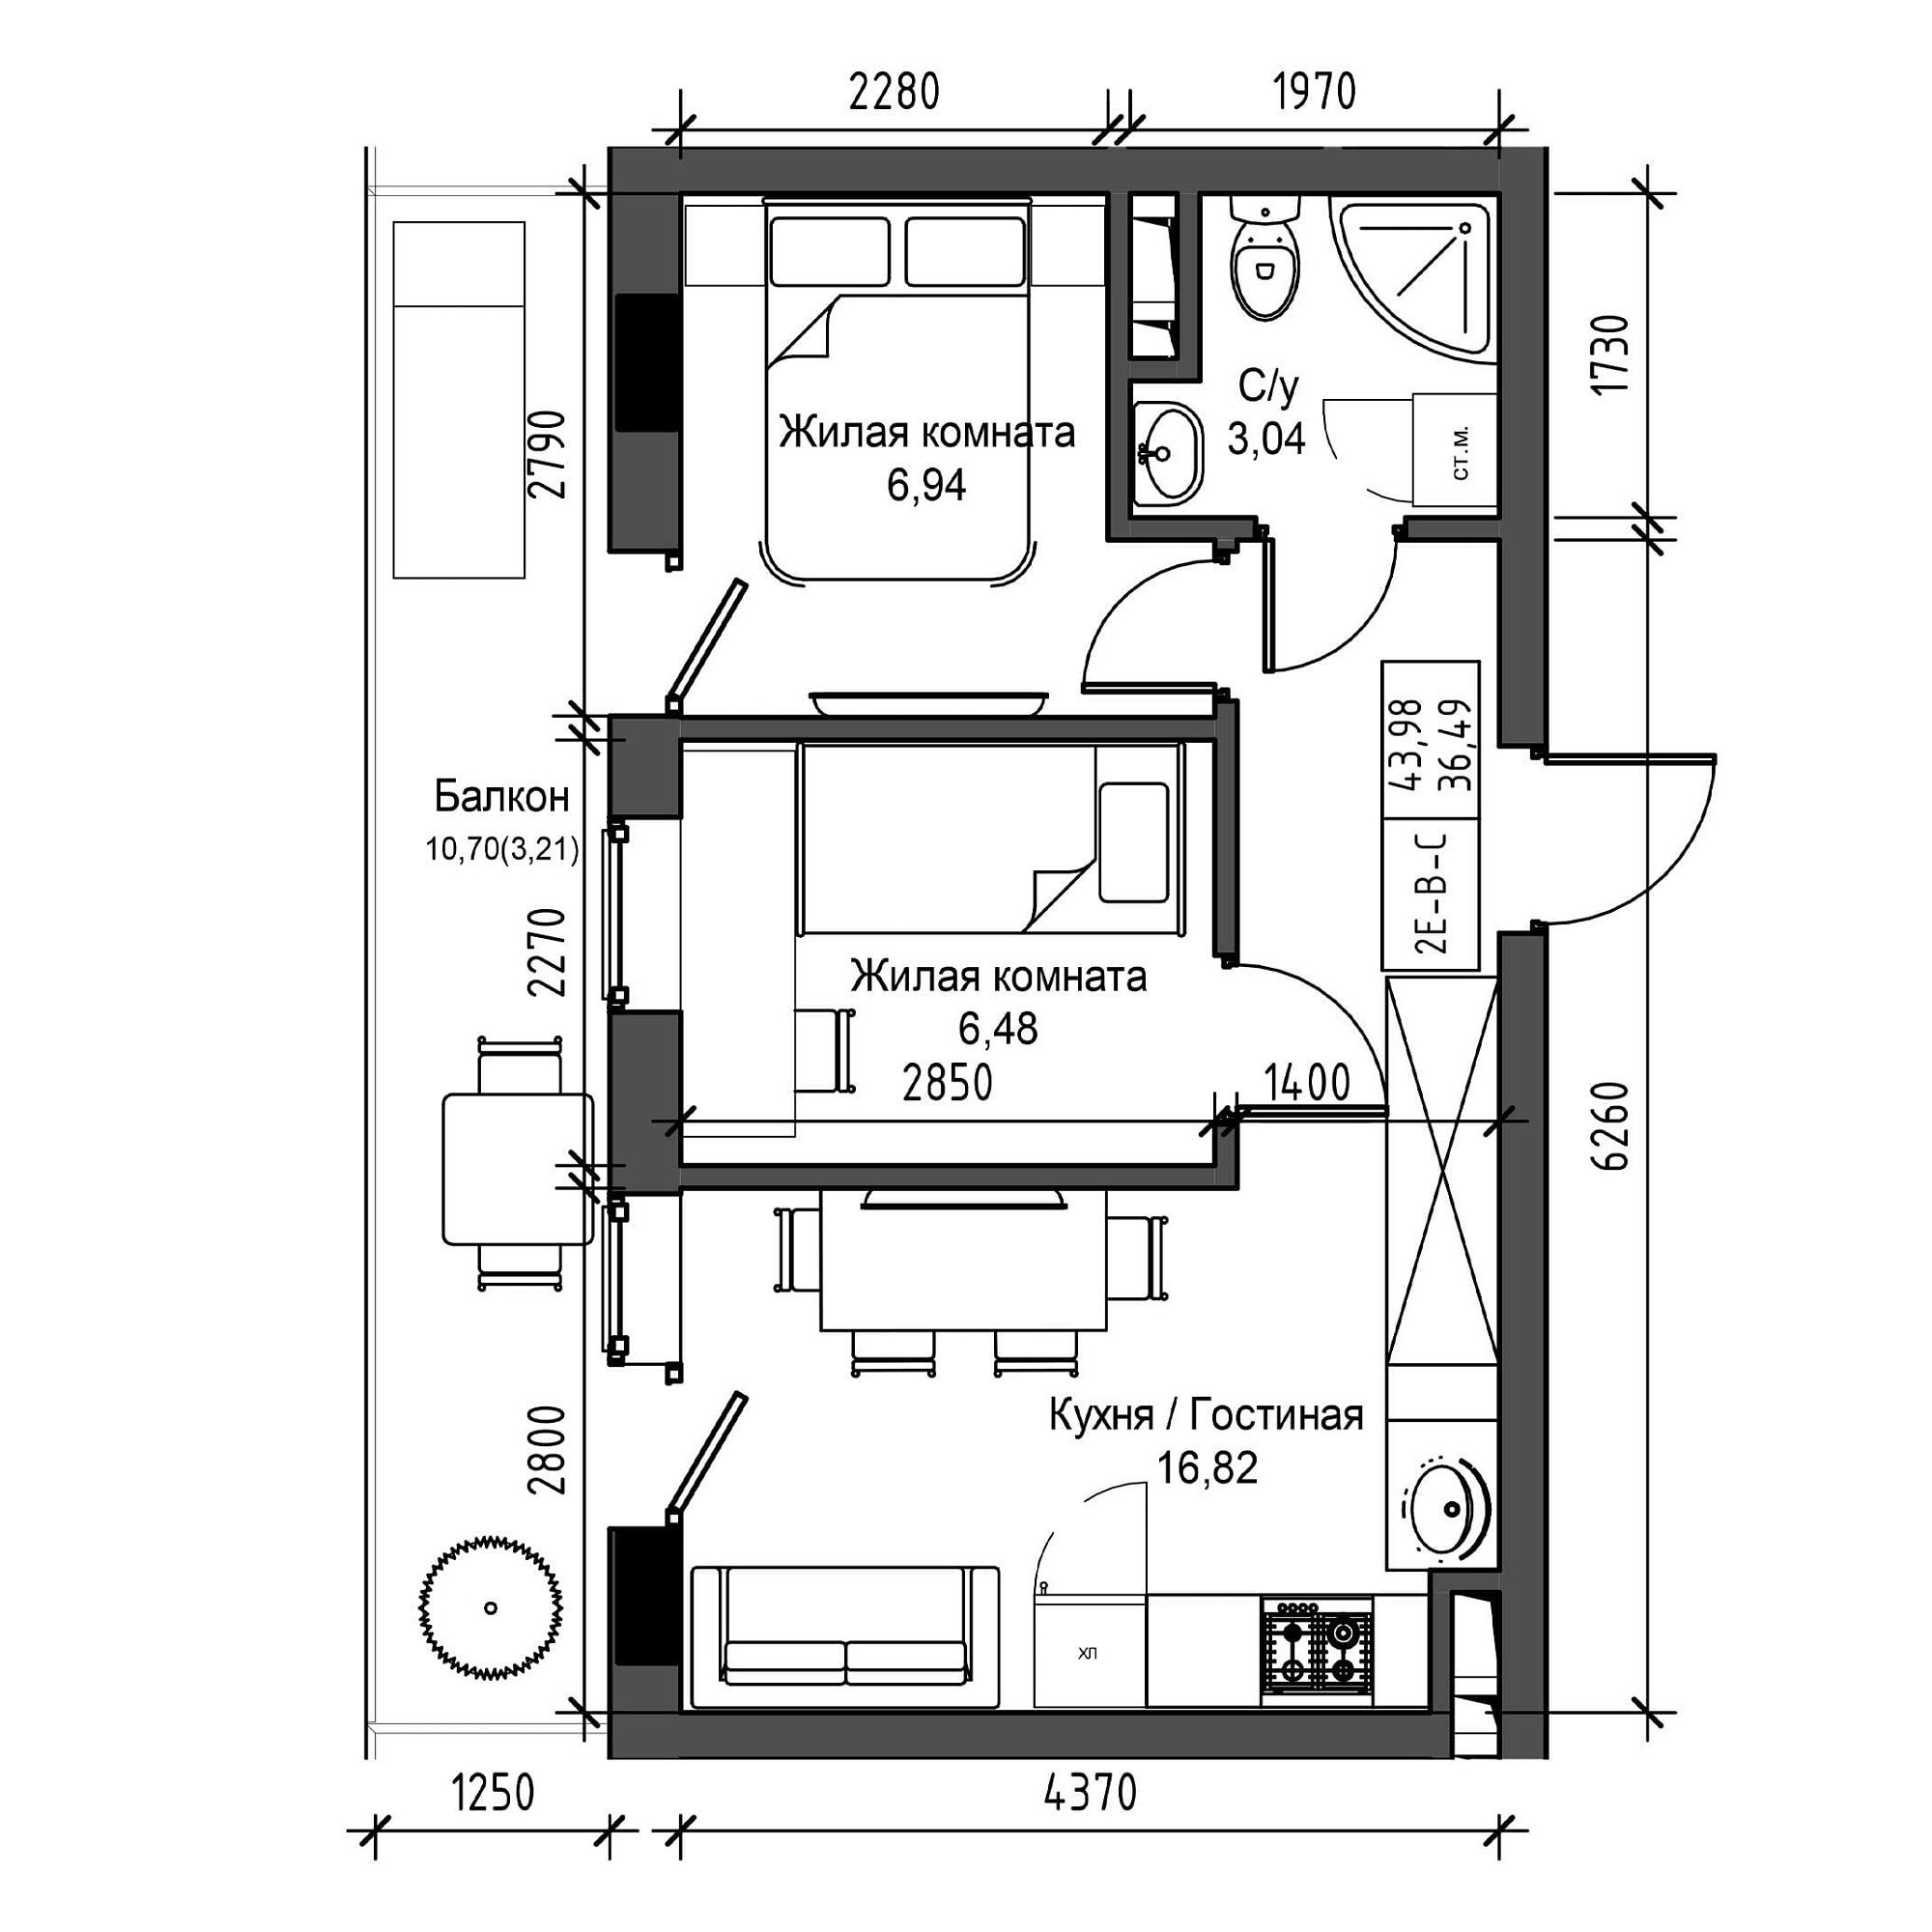 Planning 2-rm flats area 36.49m2, UM-001-04/0017.